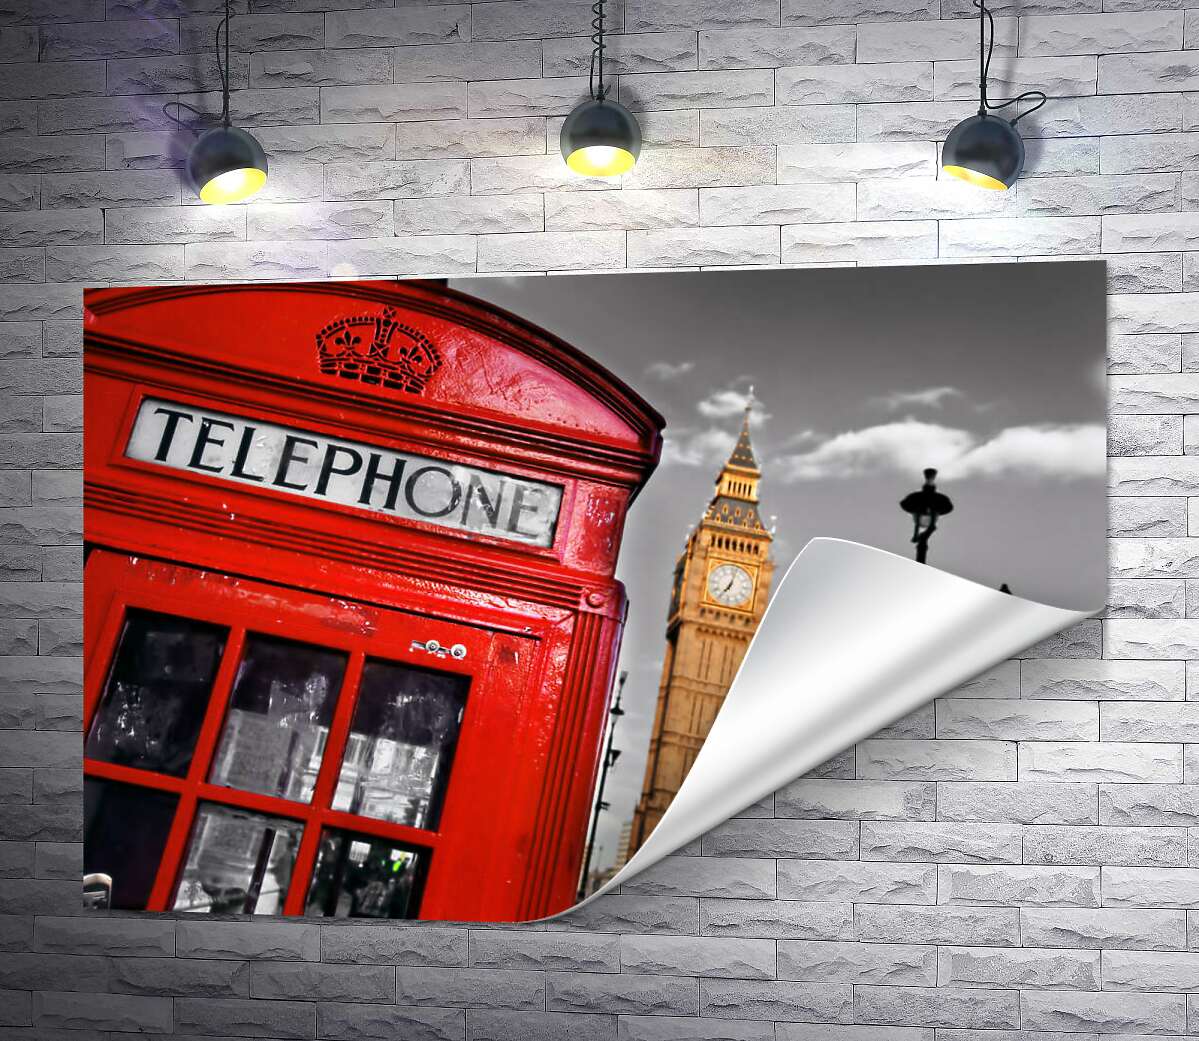 друк Символи Лондона: червона телефонна будка та годинникова башта Біг-Бен (Big Ben)